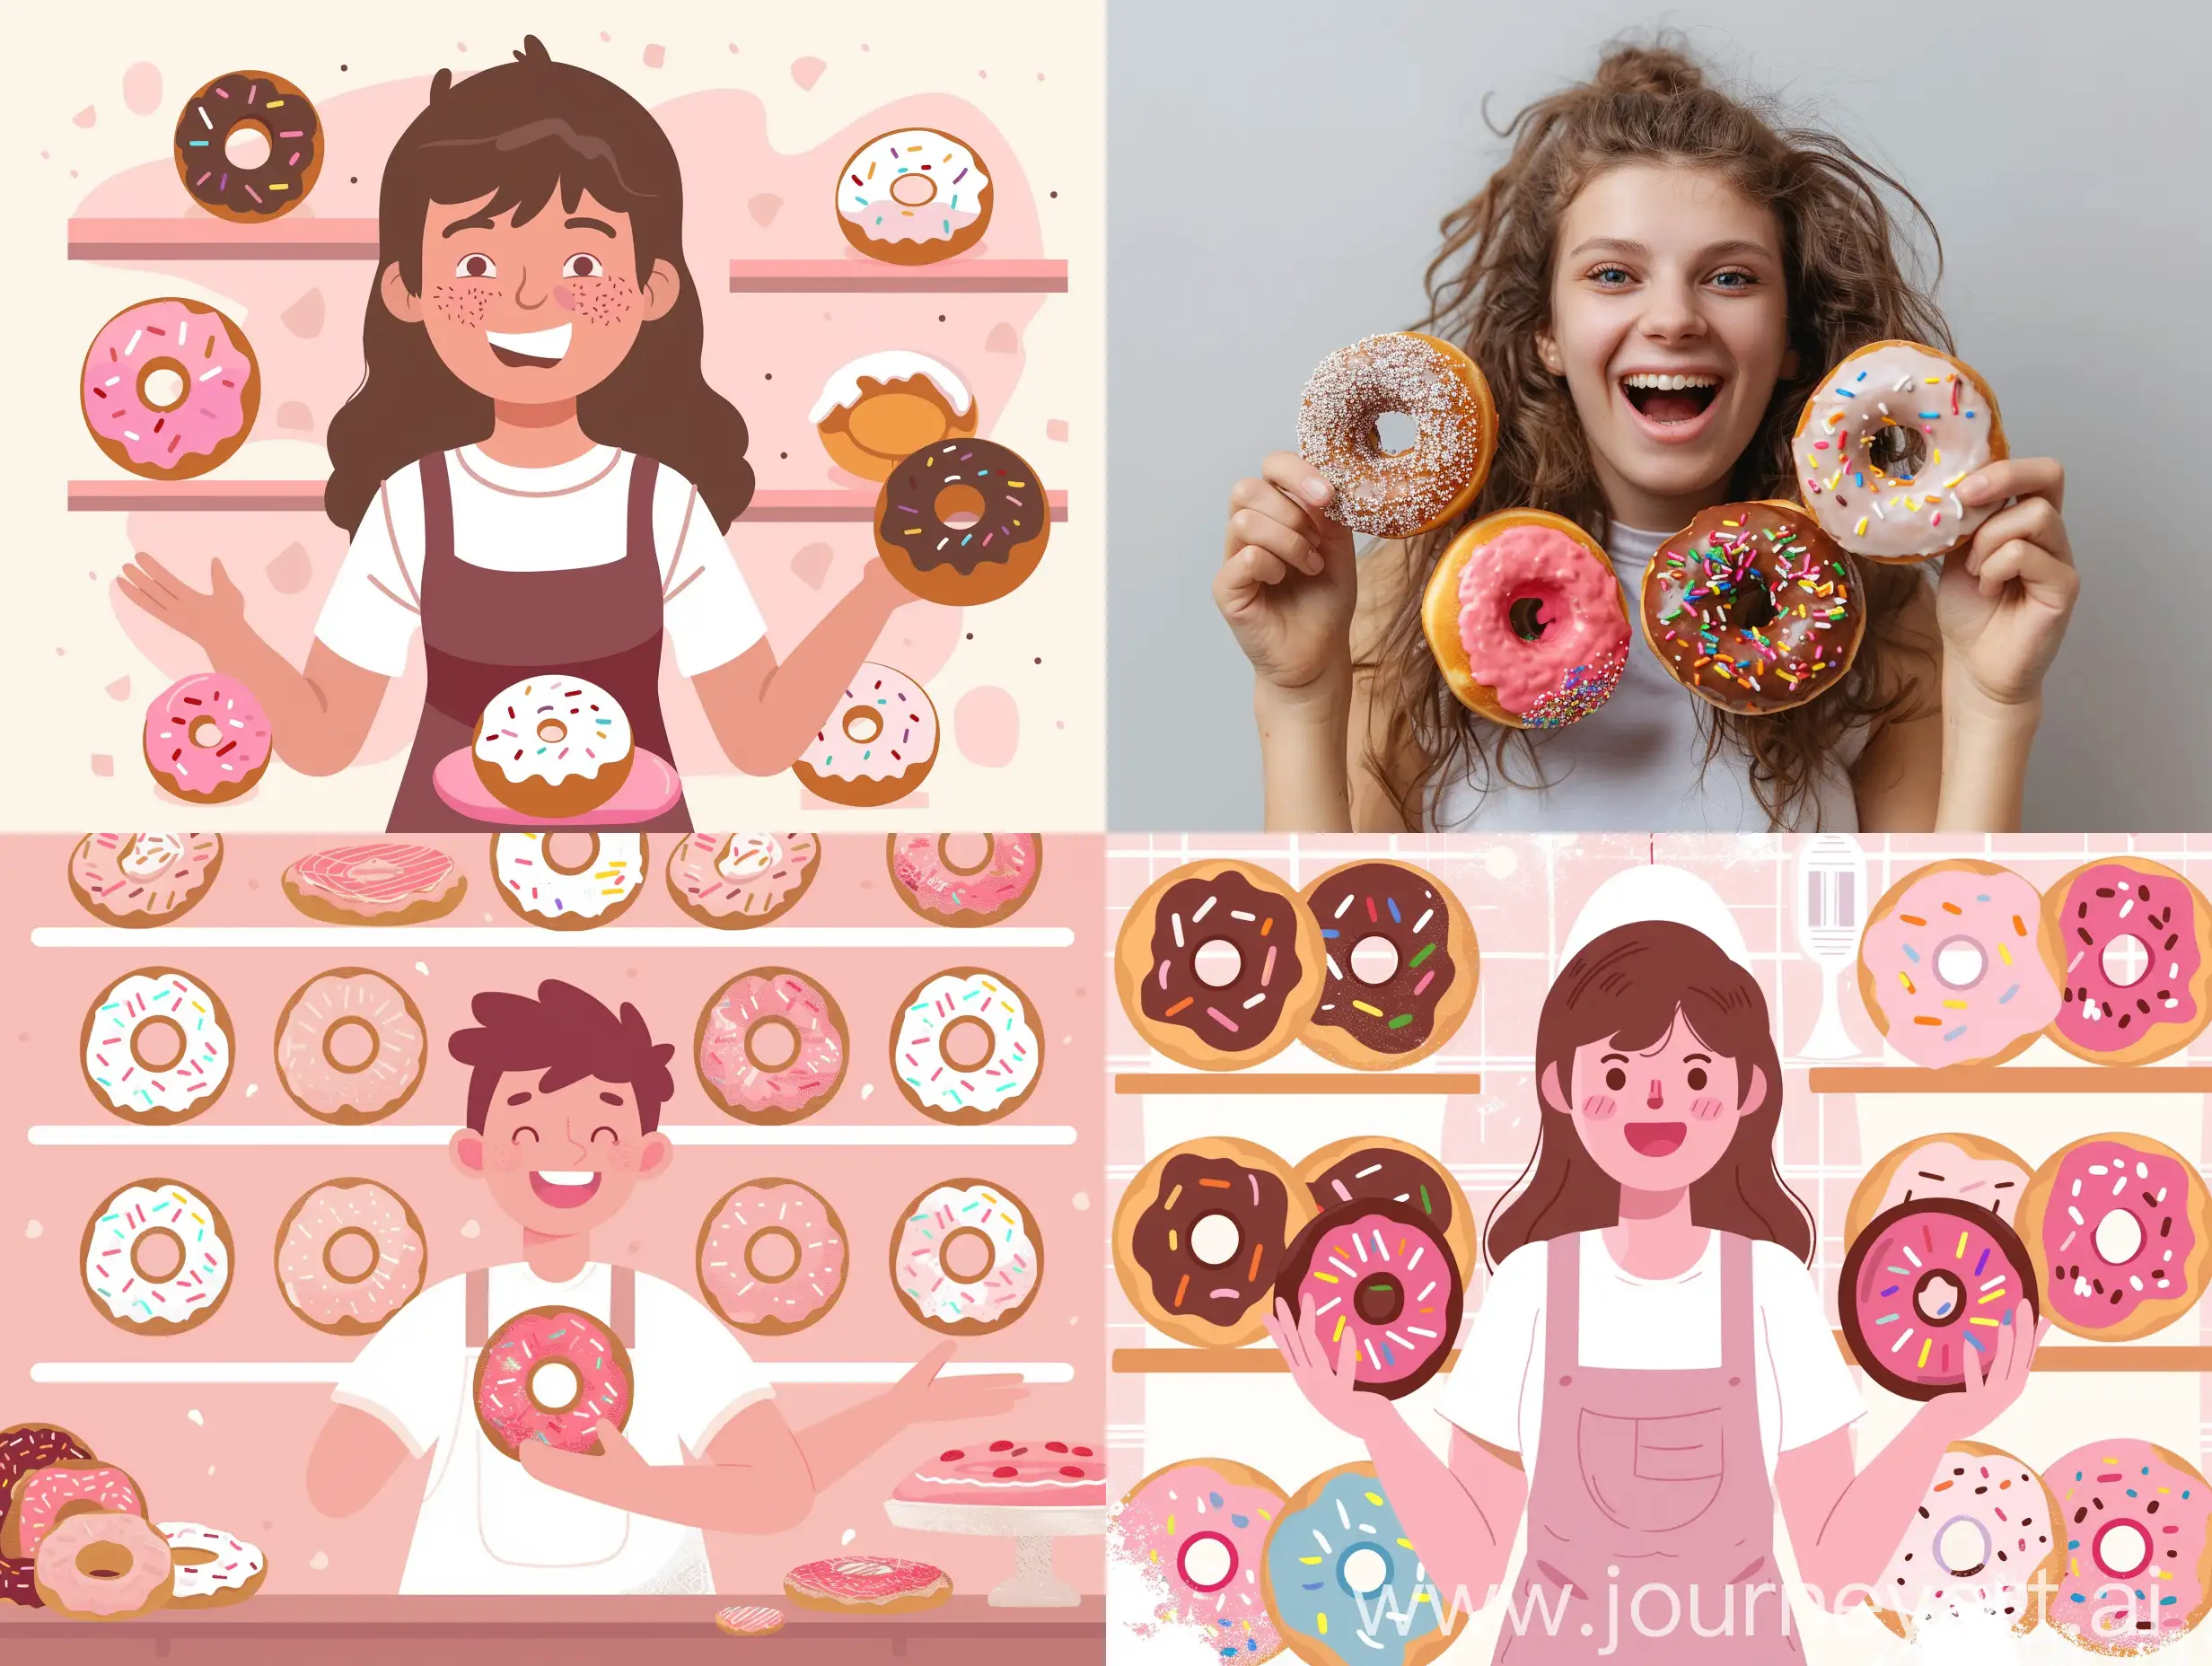 Joyful-Customer-at-Donut-Shop-with-Vibrant-Atmosphere